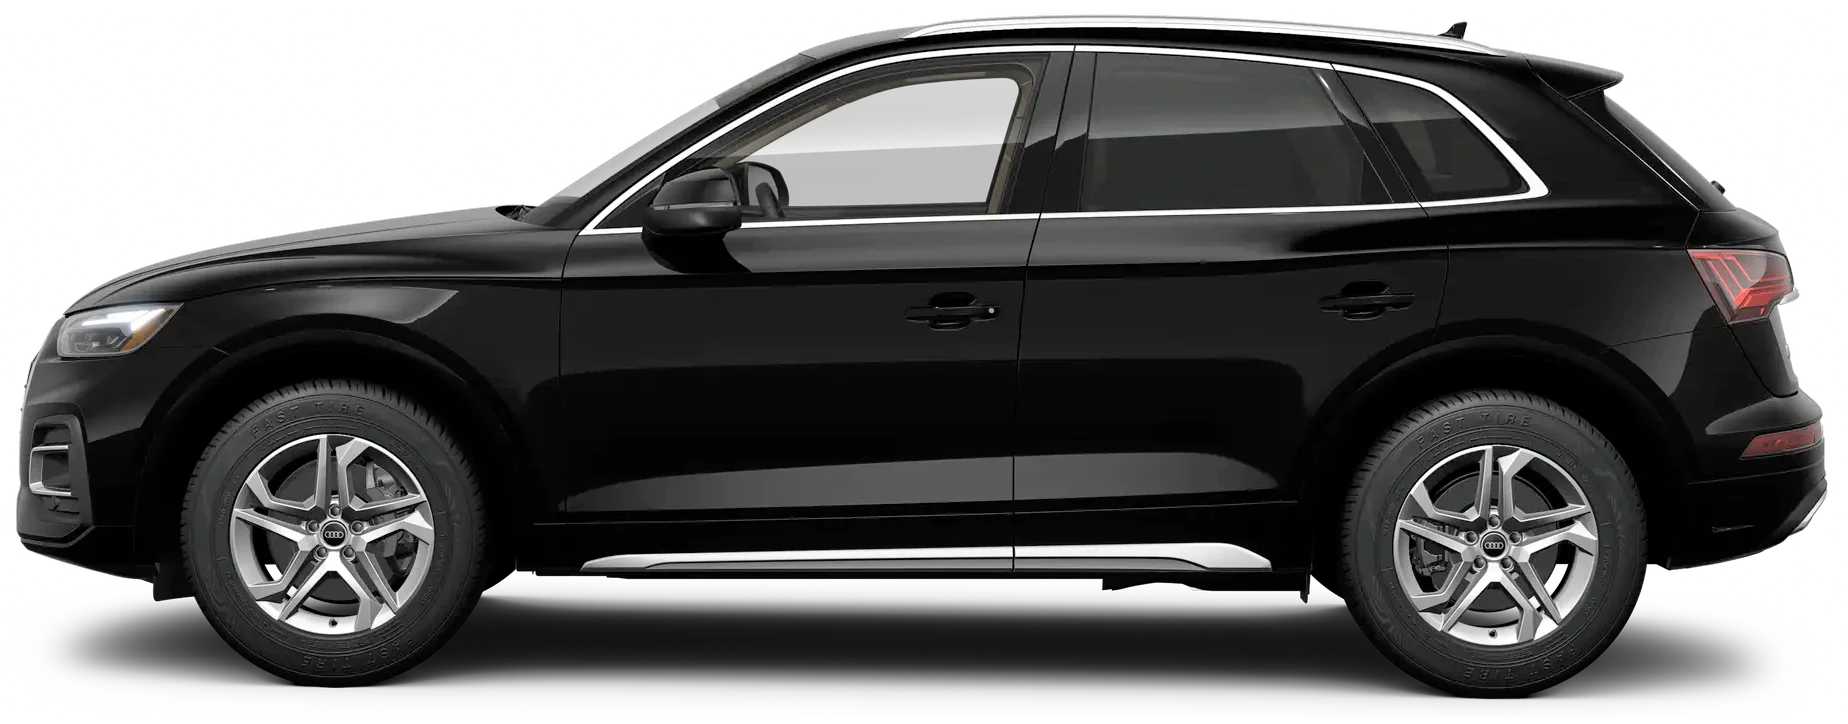 Audi SQ5 exterior - Side Profile